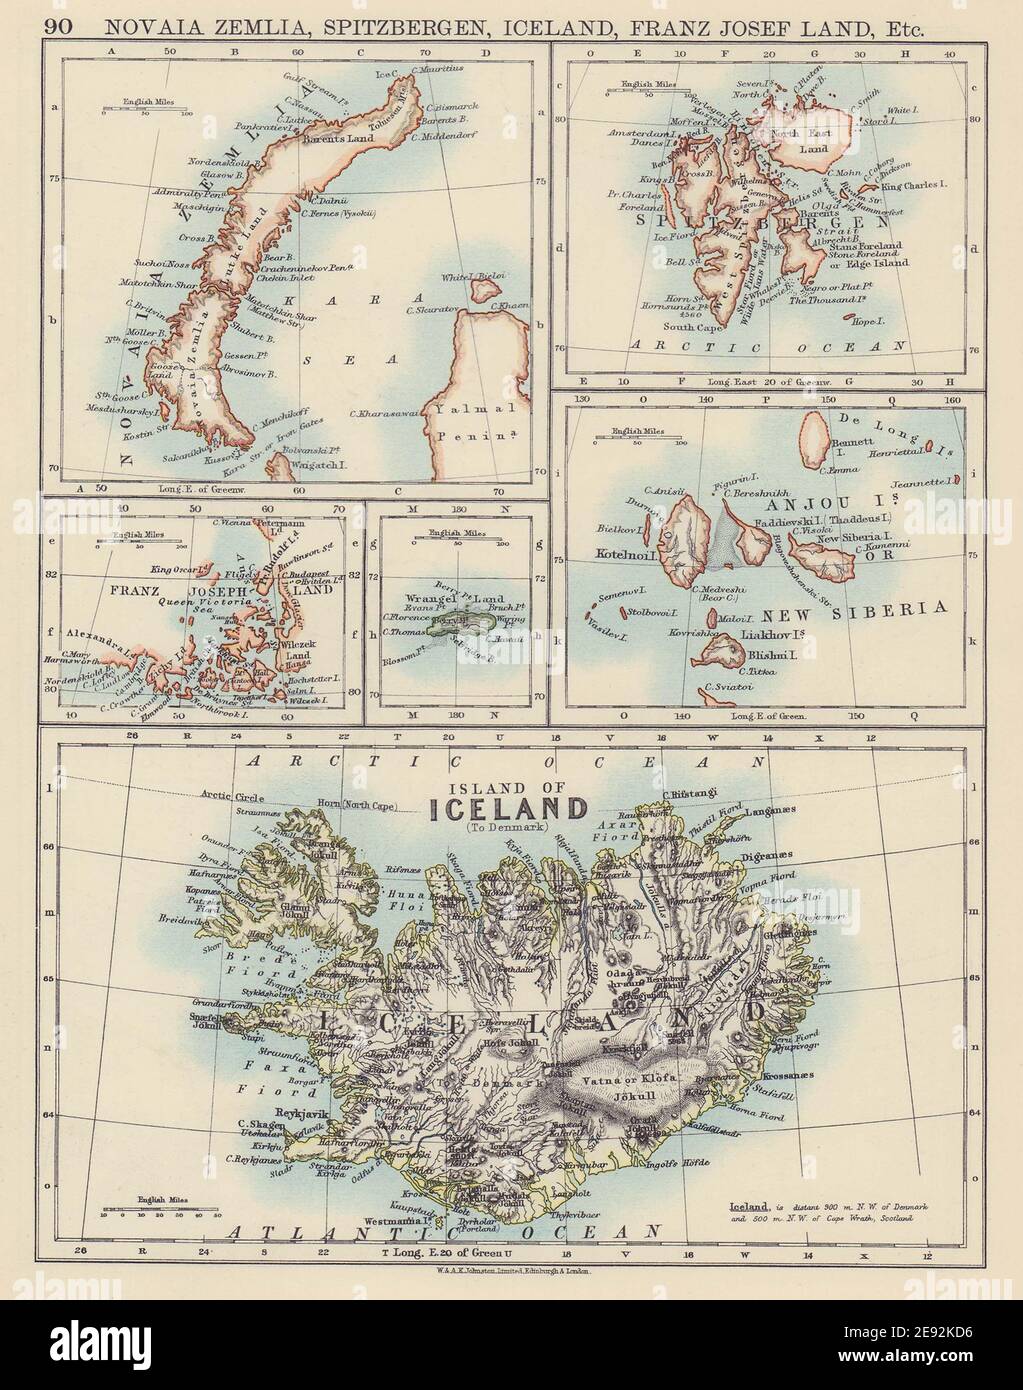 Isole ARTICHE Novaia Zemlia Spitsbergen Islanda Franz Josef Land Anjou 1901 mappa Foto Stock